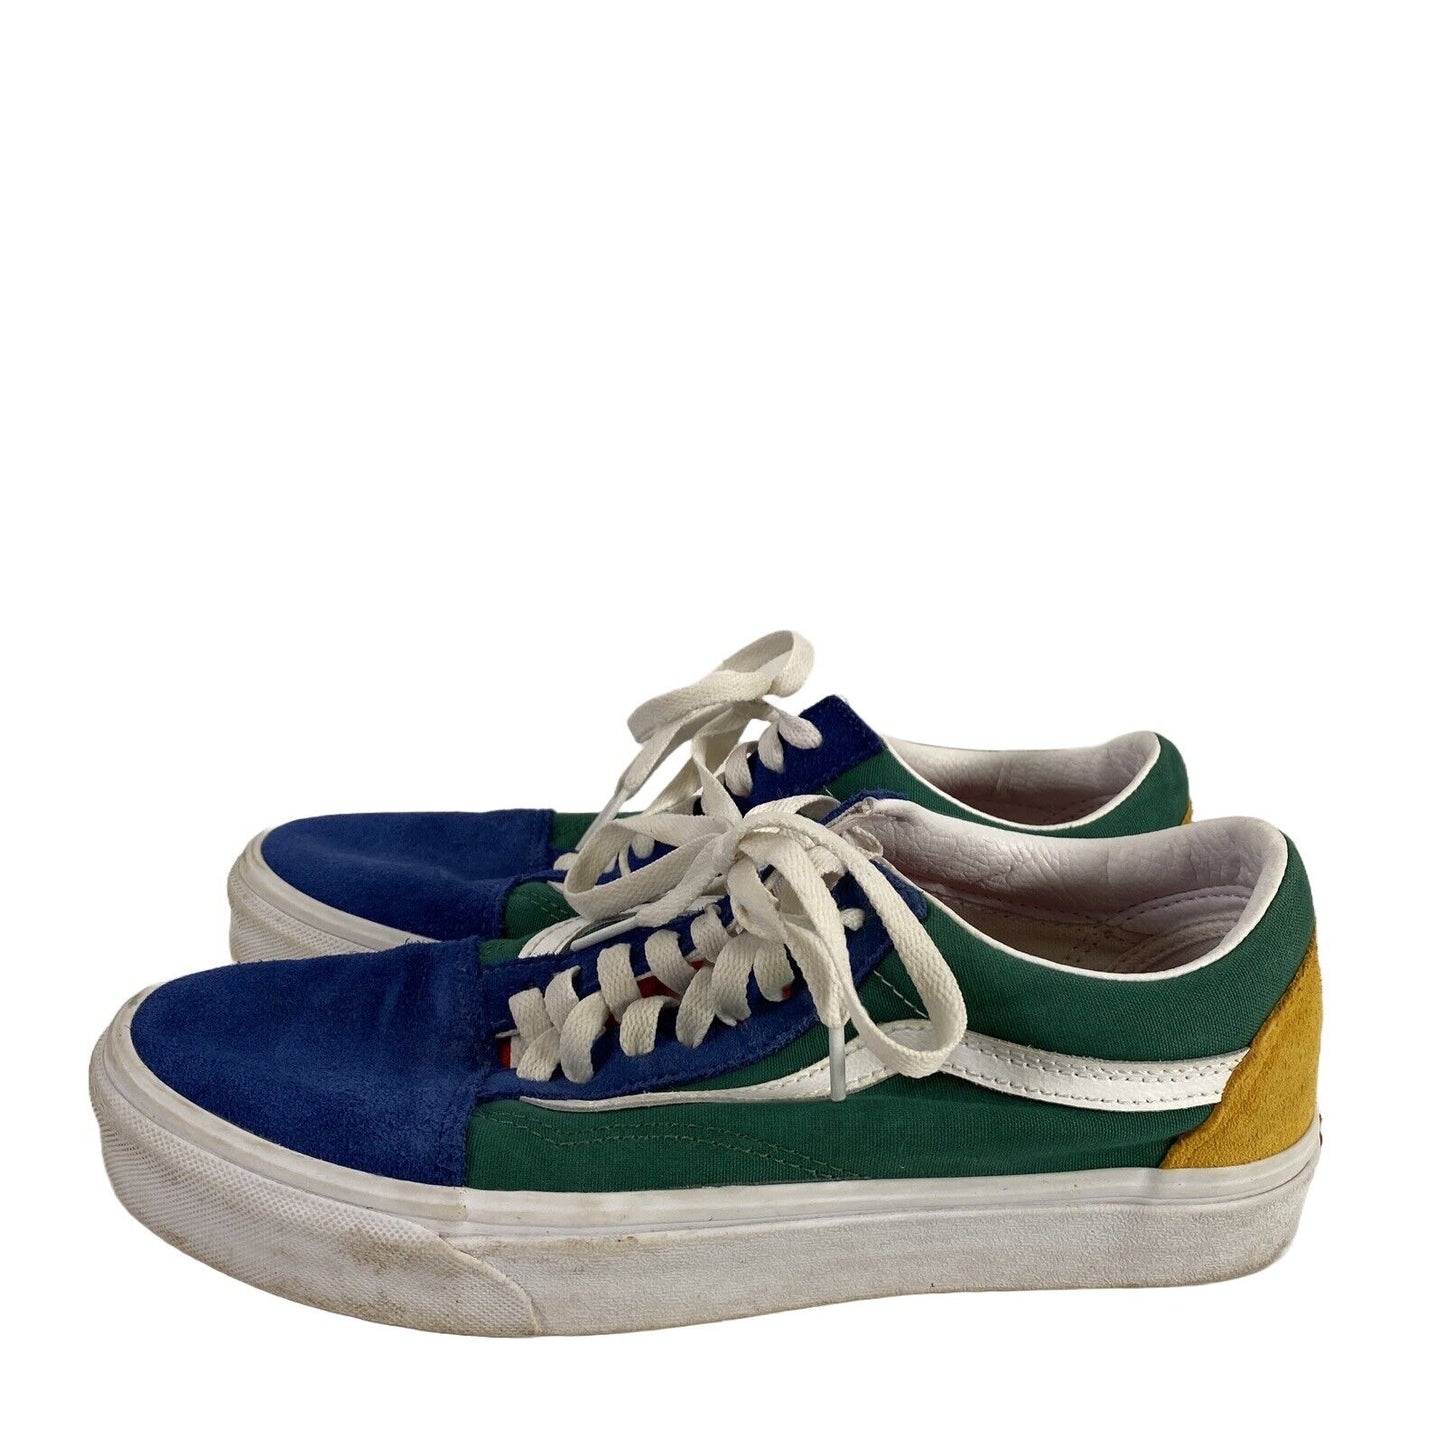 Vans Unisex Blue/Green Low Top Old Skool Lace Up Sneakers - Women's 9.5